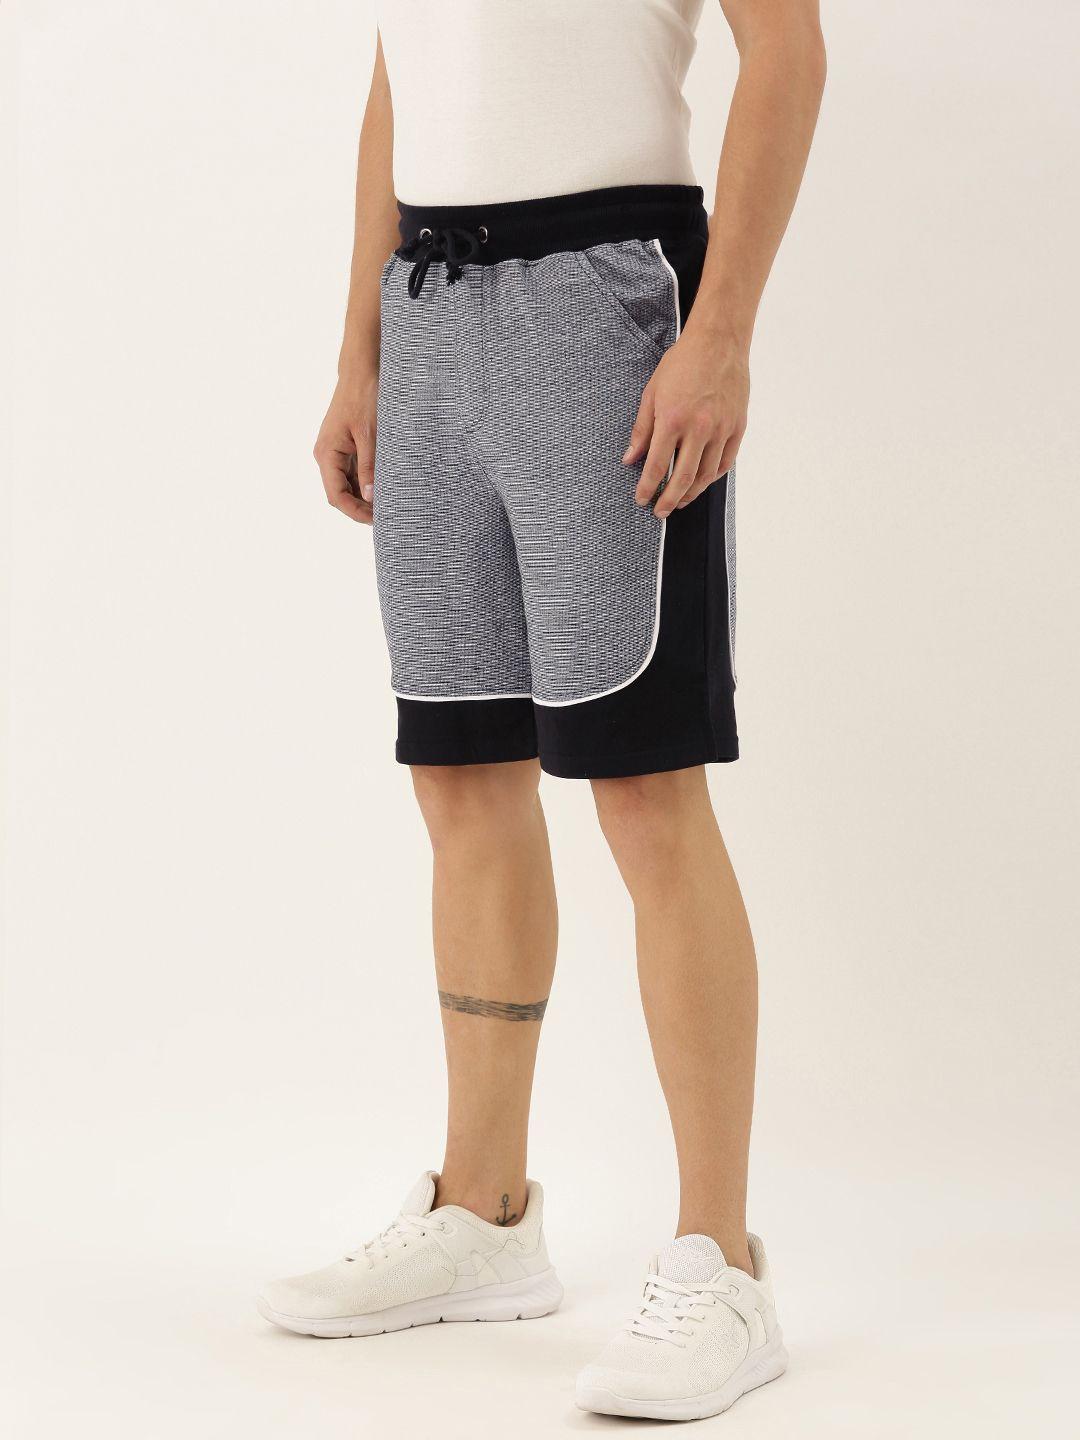 ARISE Men Grey Solid Regular Fit Regular Shorts with Colorblocking Panel Detail